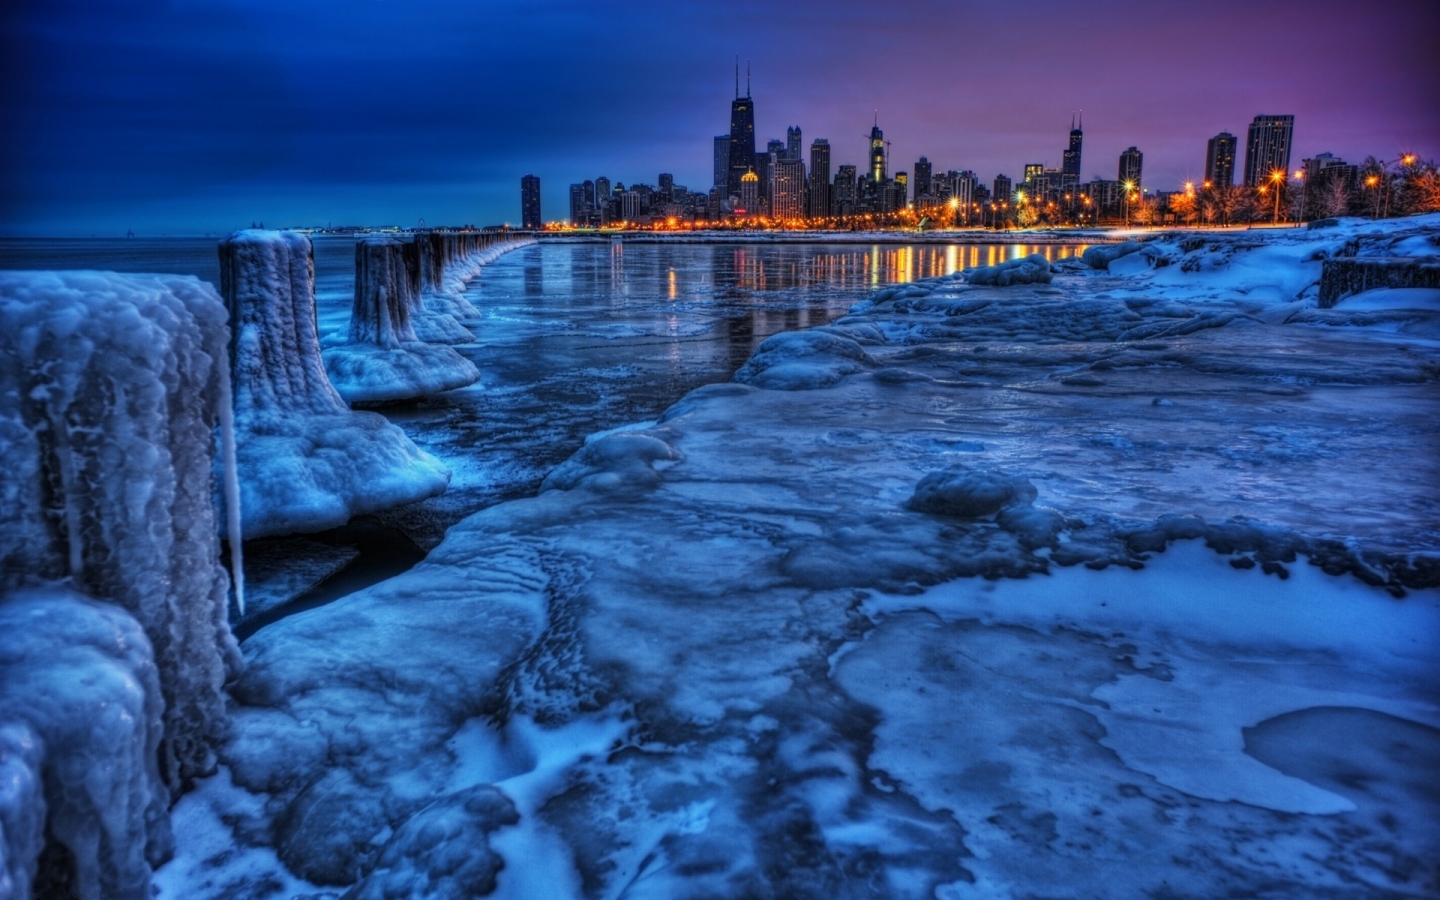 Frozen city for 1440 x 900 widescreen resolution